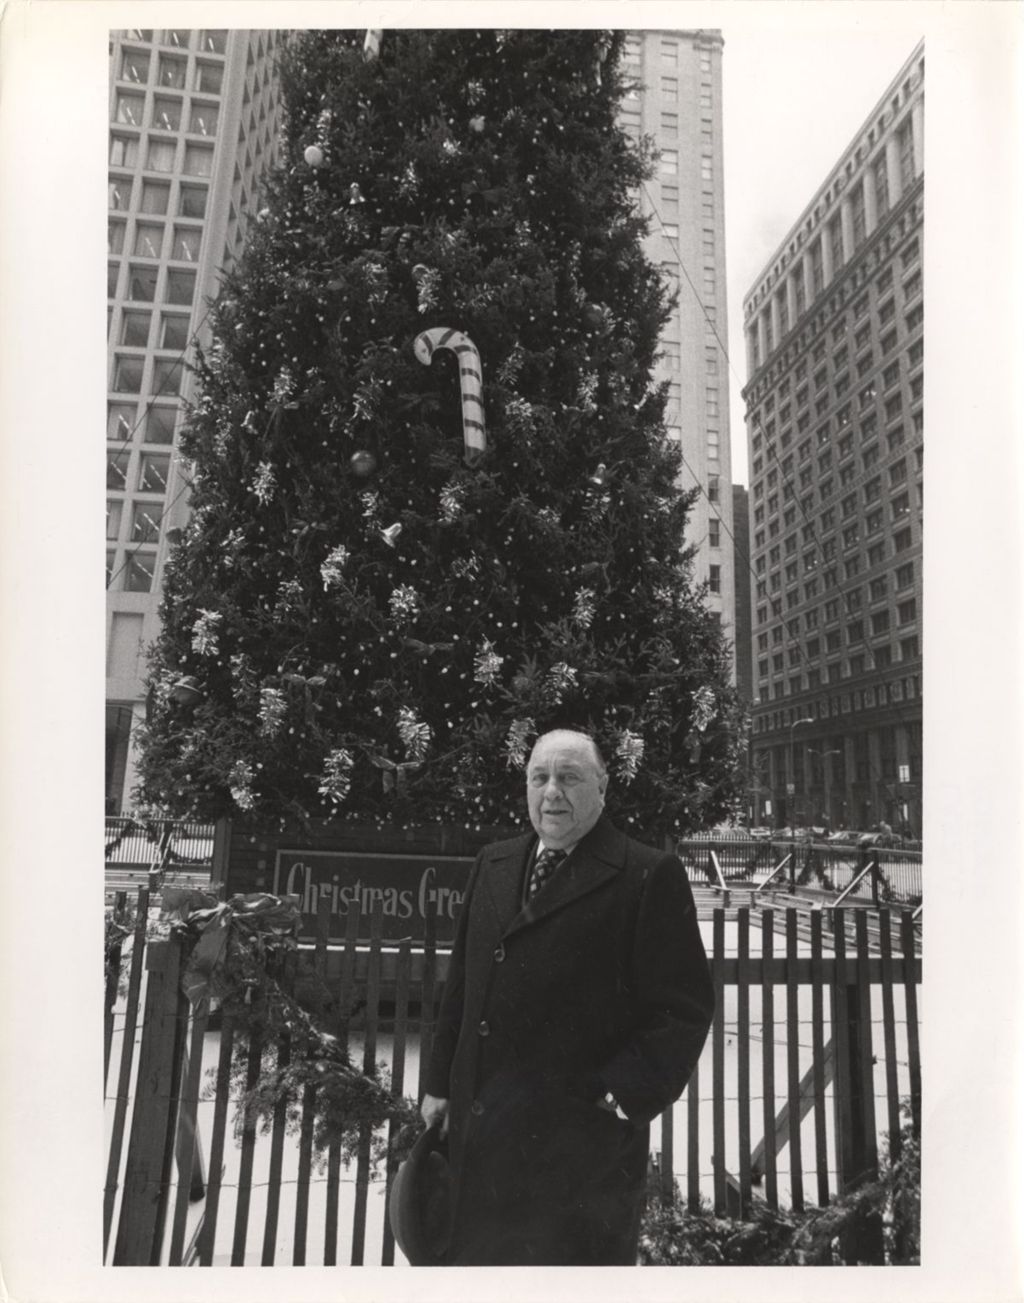 Richard J. Daley with Christmas tree, Civic Center Plaza